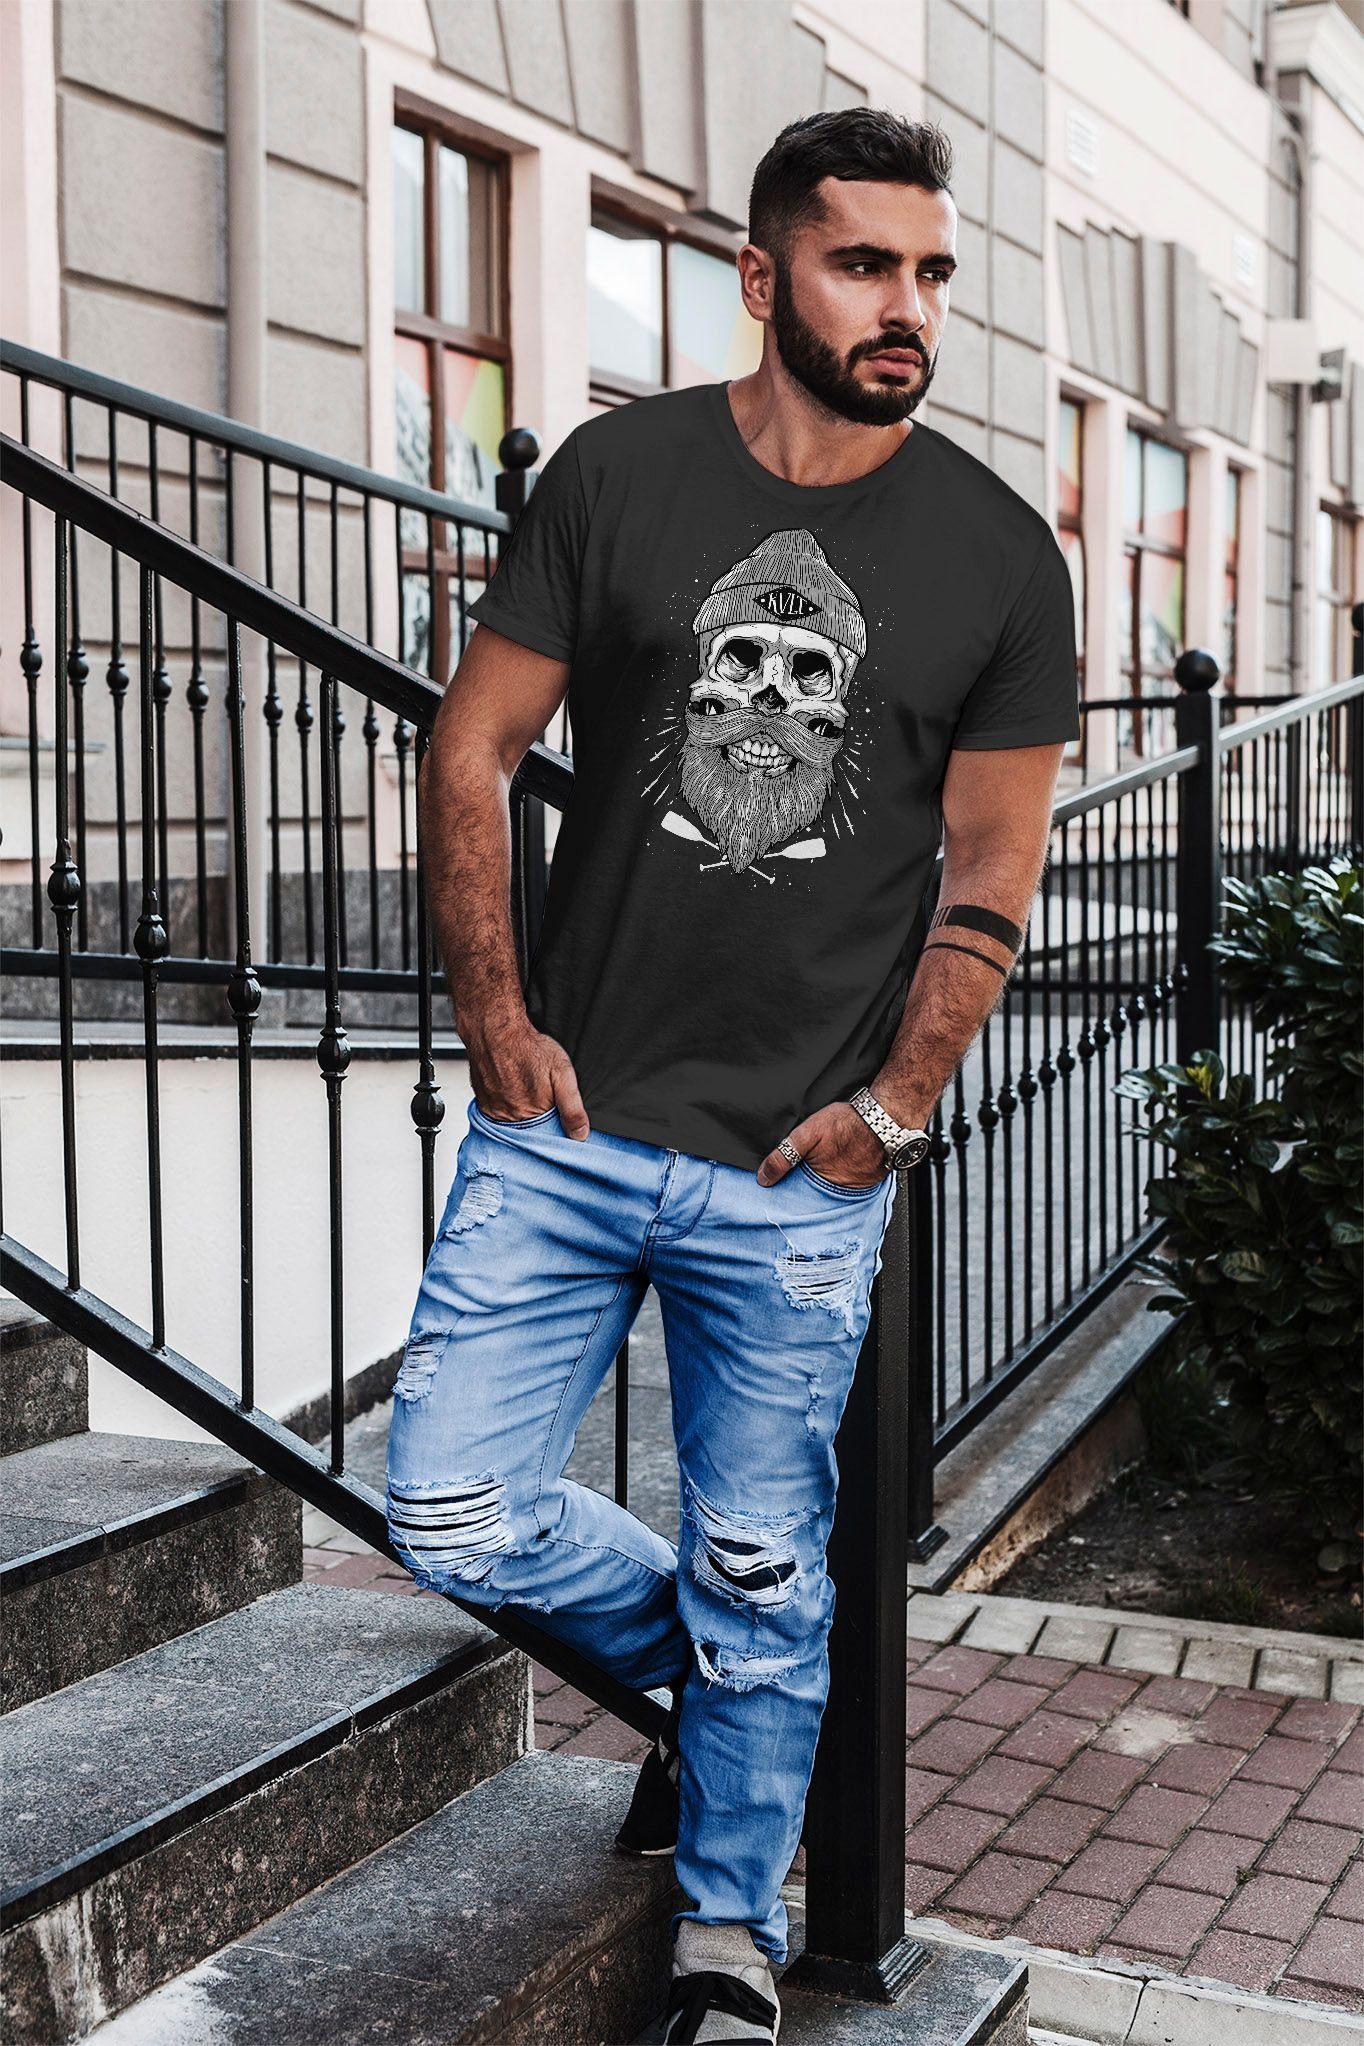 Neverless Print-Shirt Herren T-Shirt Print Beard Slim Captain Neverless® Kapitän mit Totenkopf Fit Skull Bart schwarz